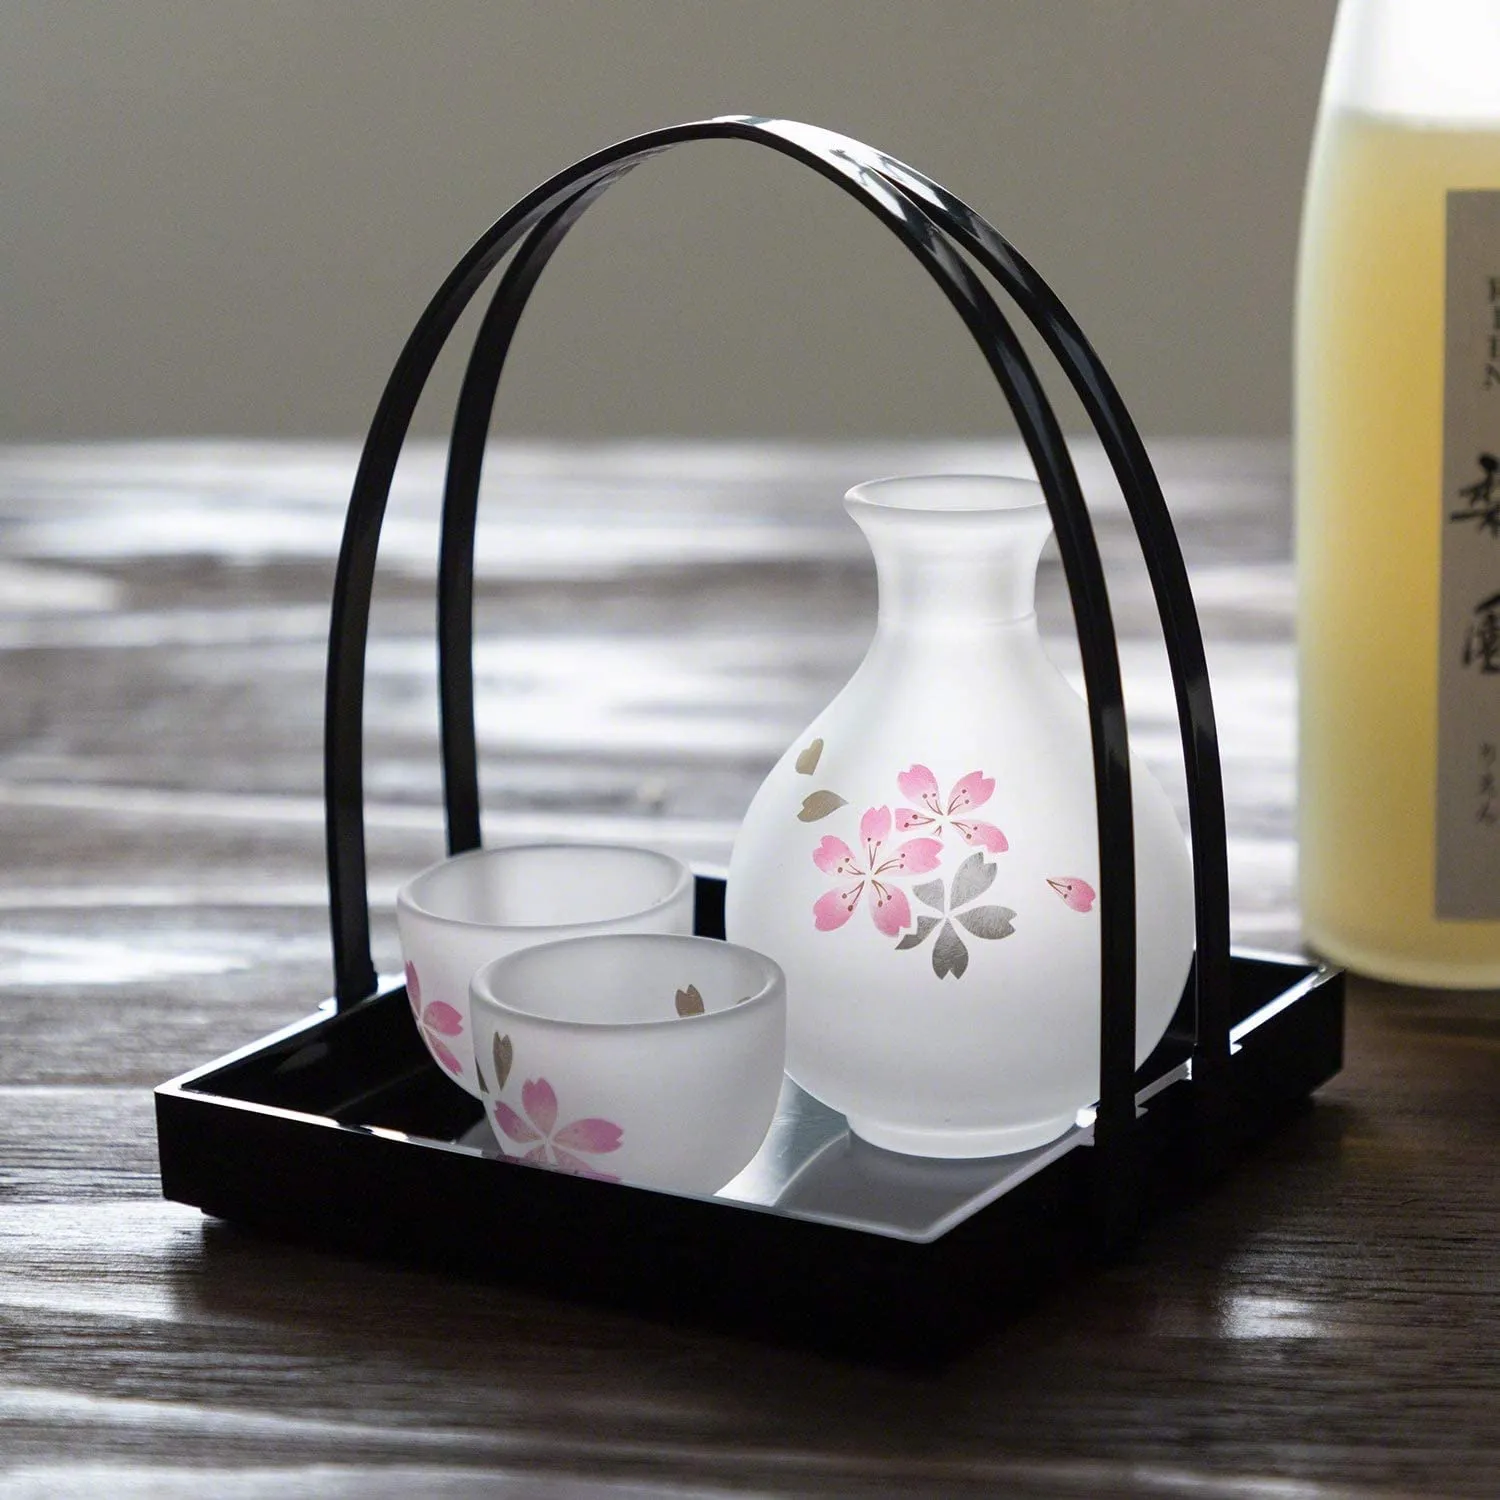 Wazakura Handmade Japanese Sake Serving Glass Set with Tray, Cherry Blossom Sakura Design